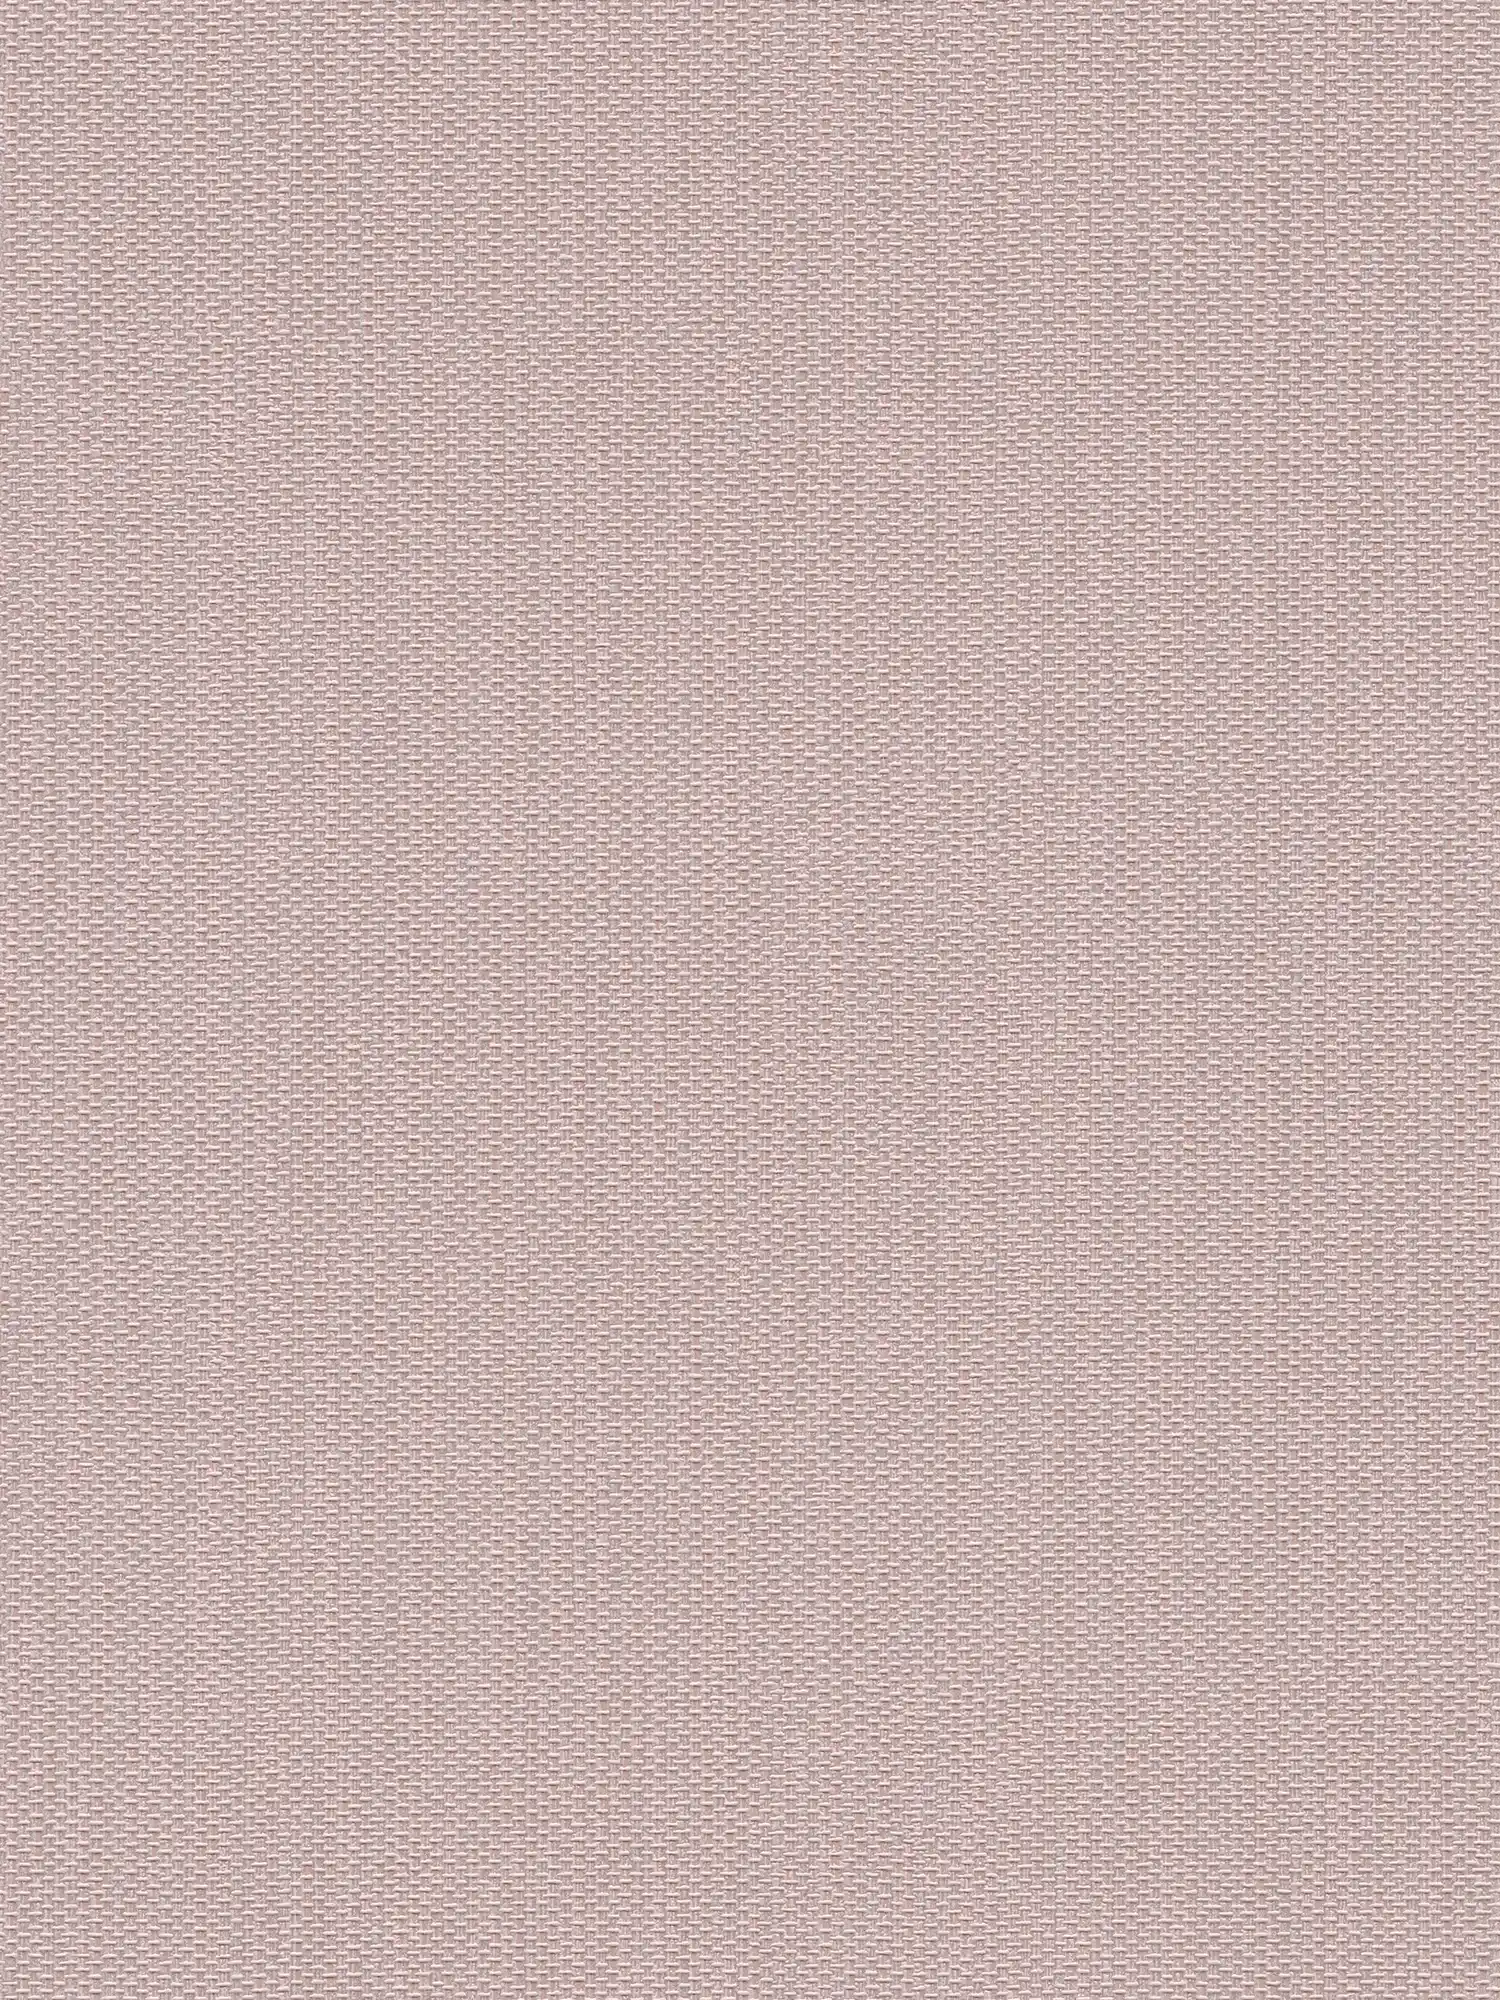 Papel pintado tejido-no tejido texturizado con aspecto textil - rosa, plata
